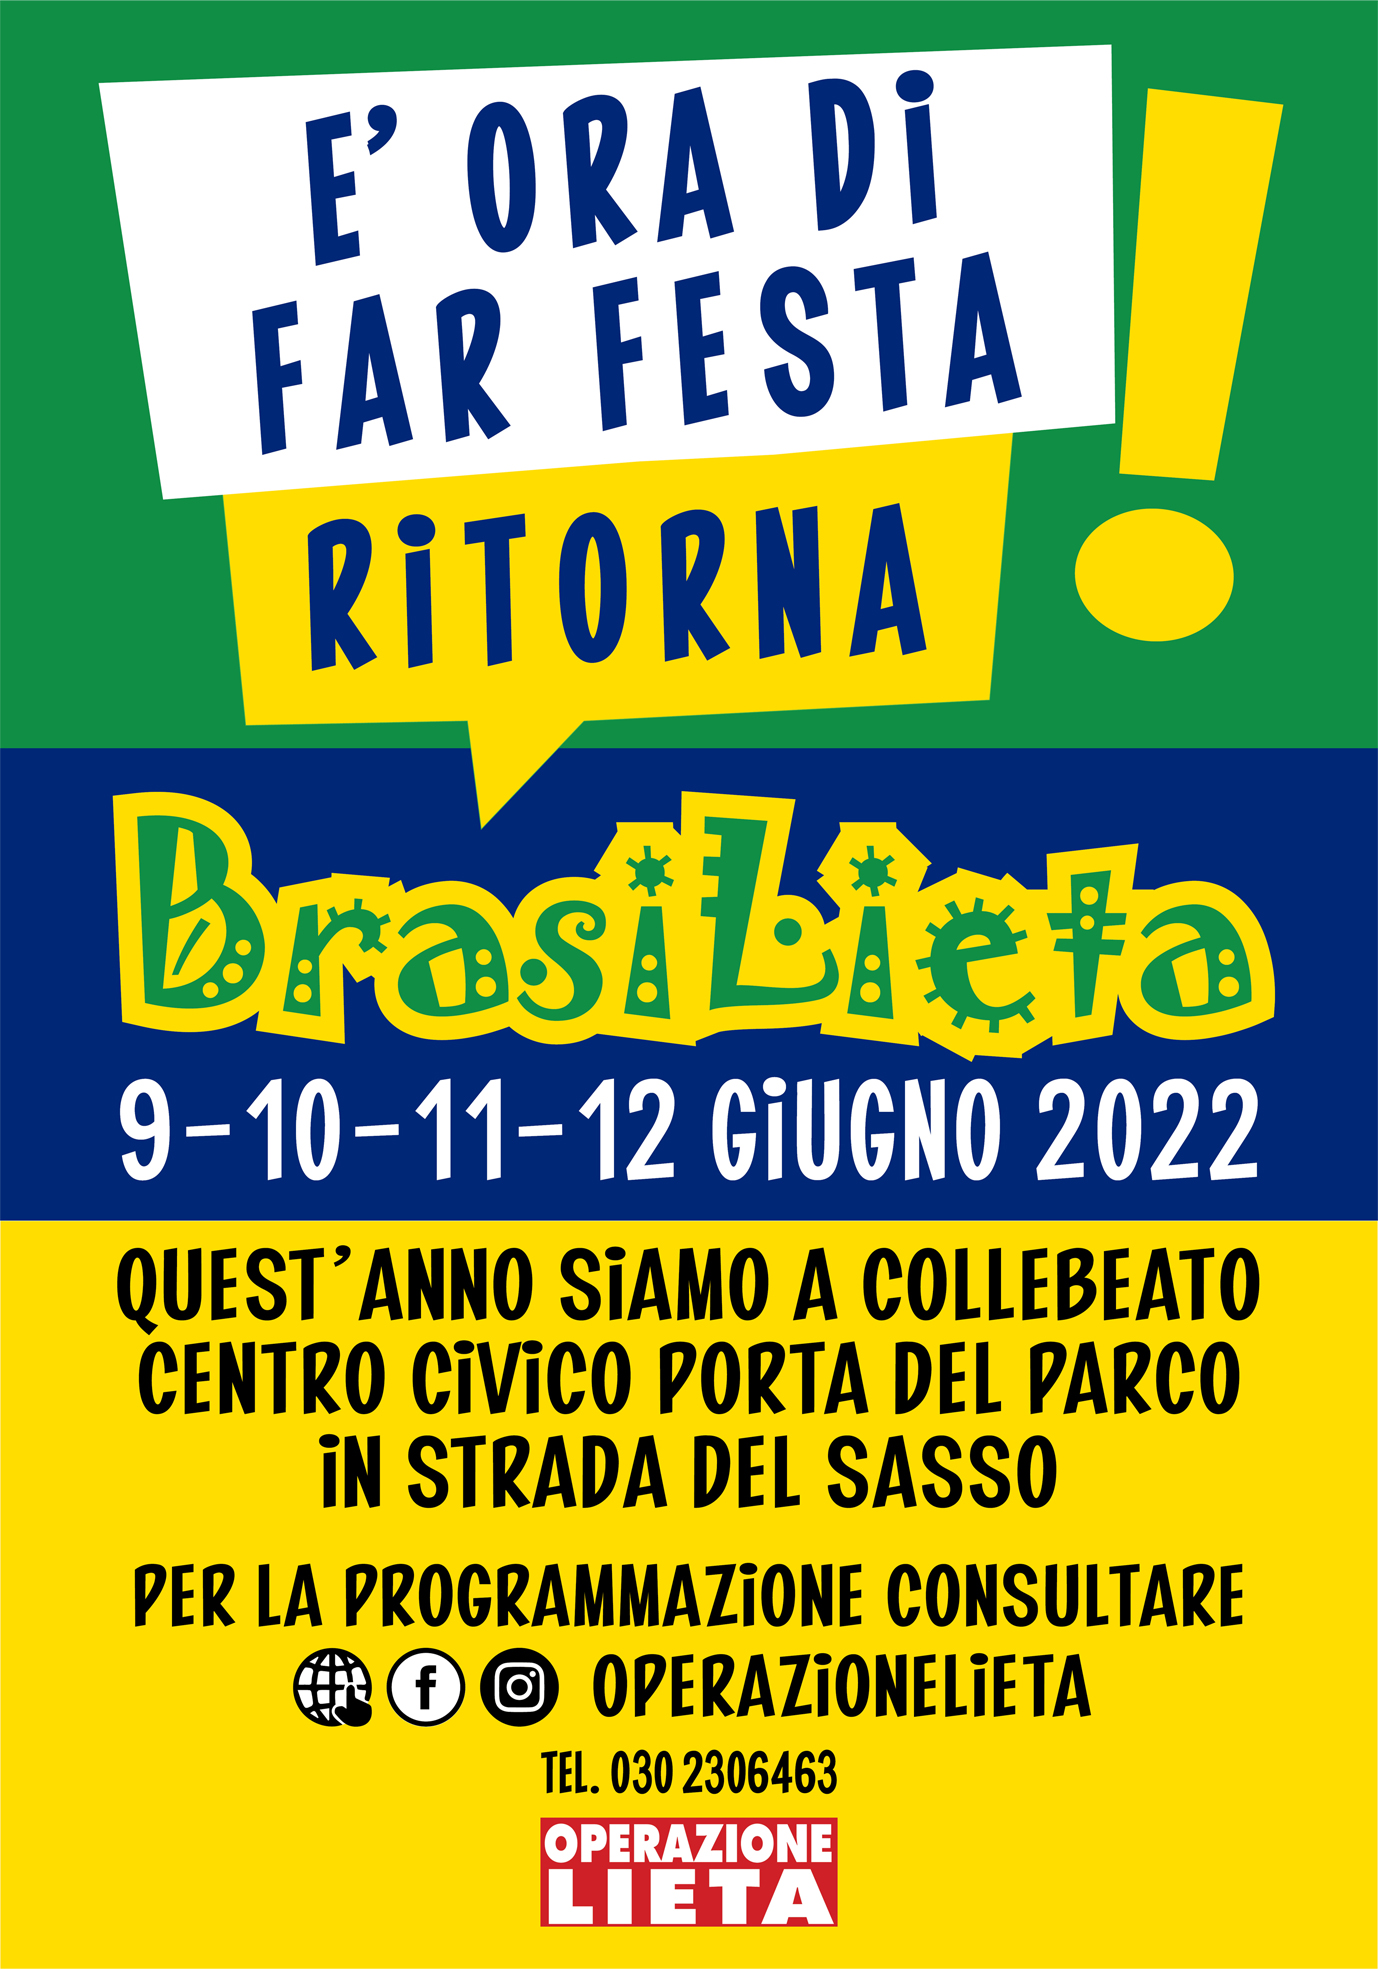 BRASILIETA 2022 dal 09 al 12 giugno